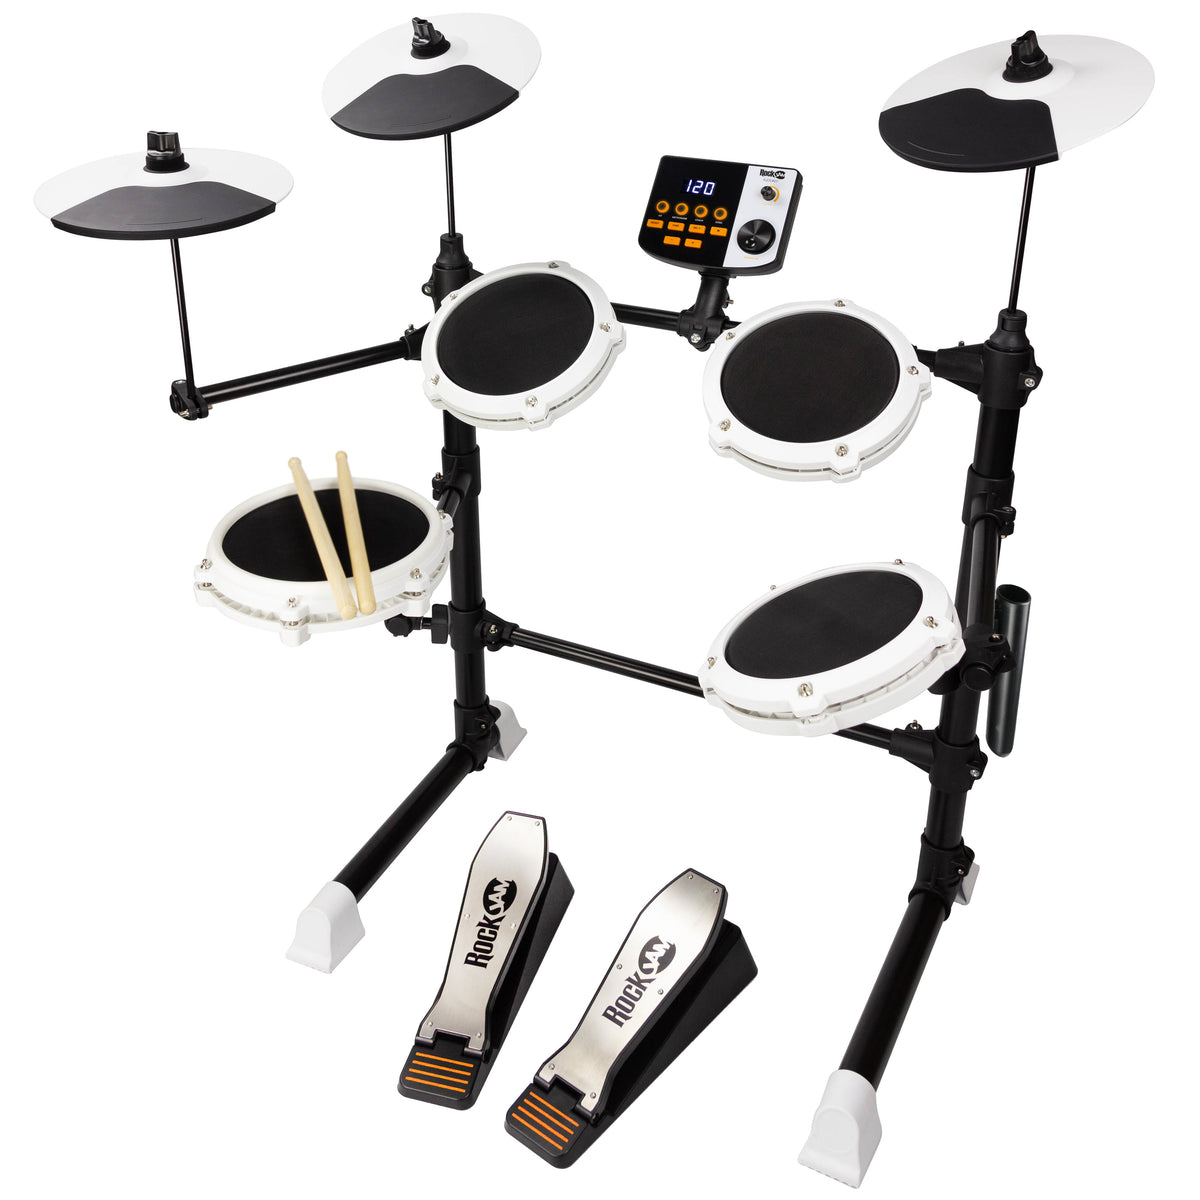 RockJam new Electronic drum kit RJDDK01